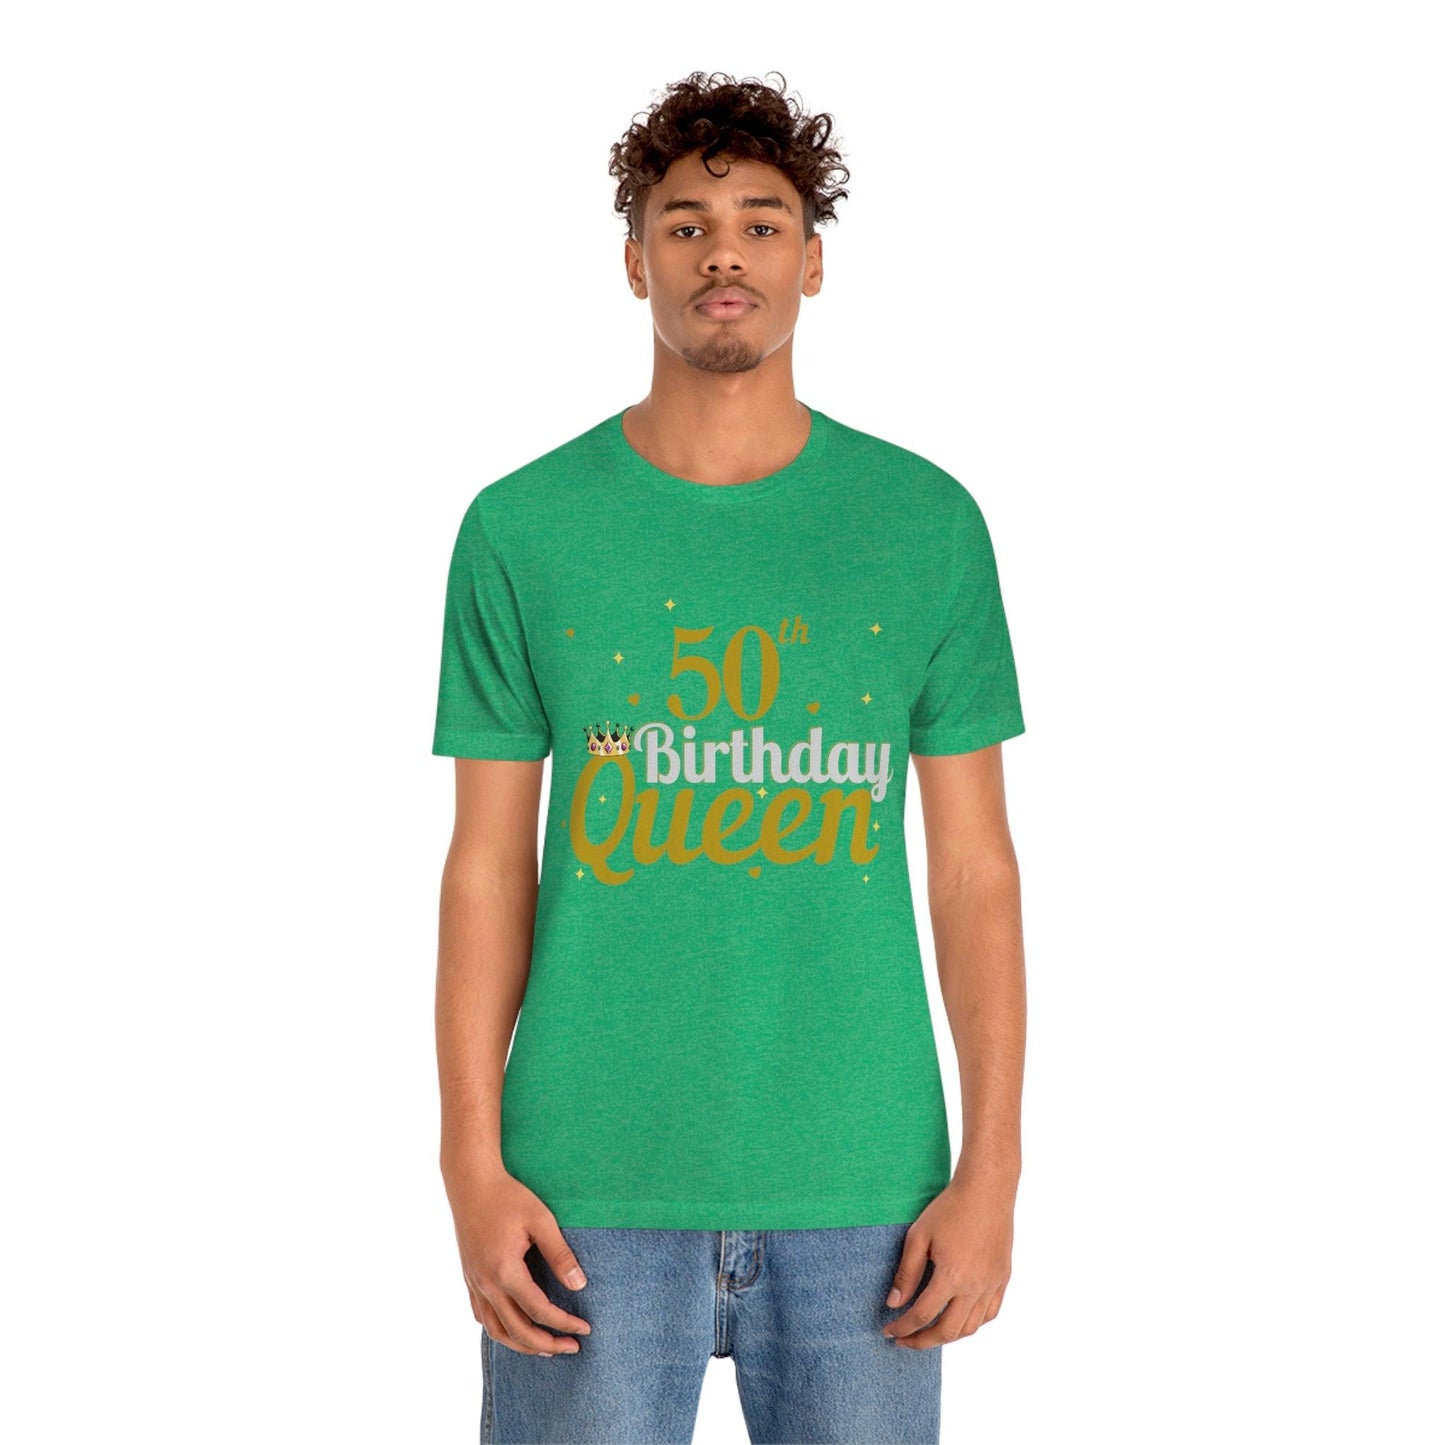 50th birthday queen shirt, birthday shirt, gift for her